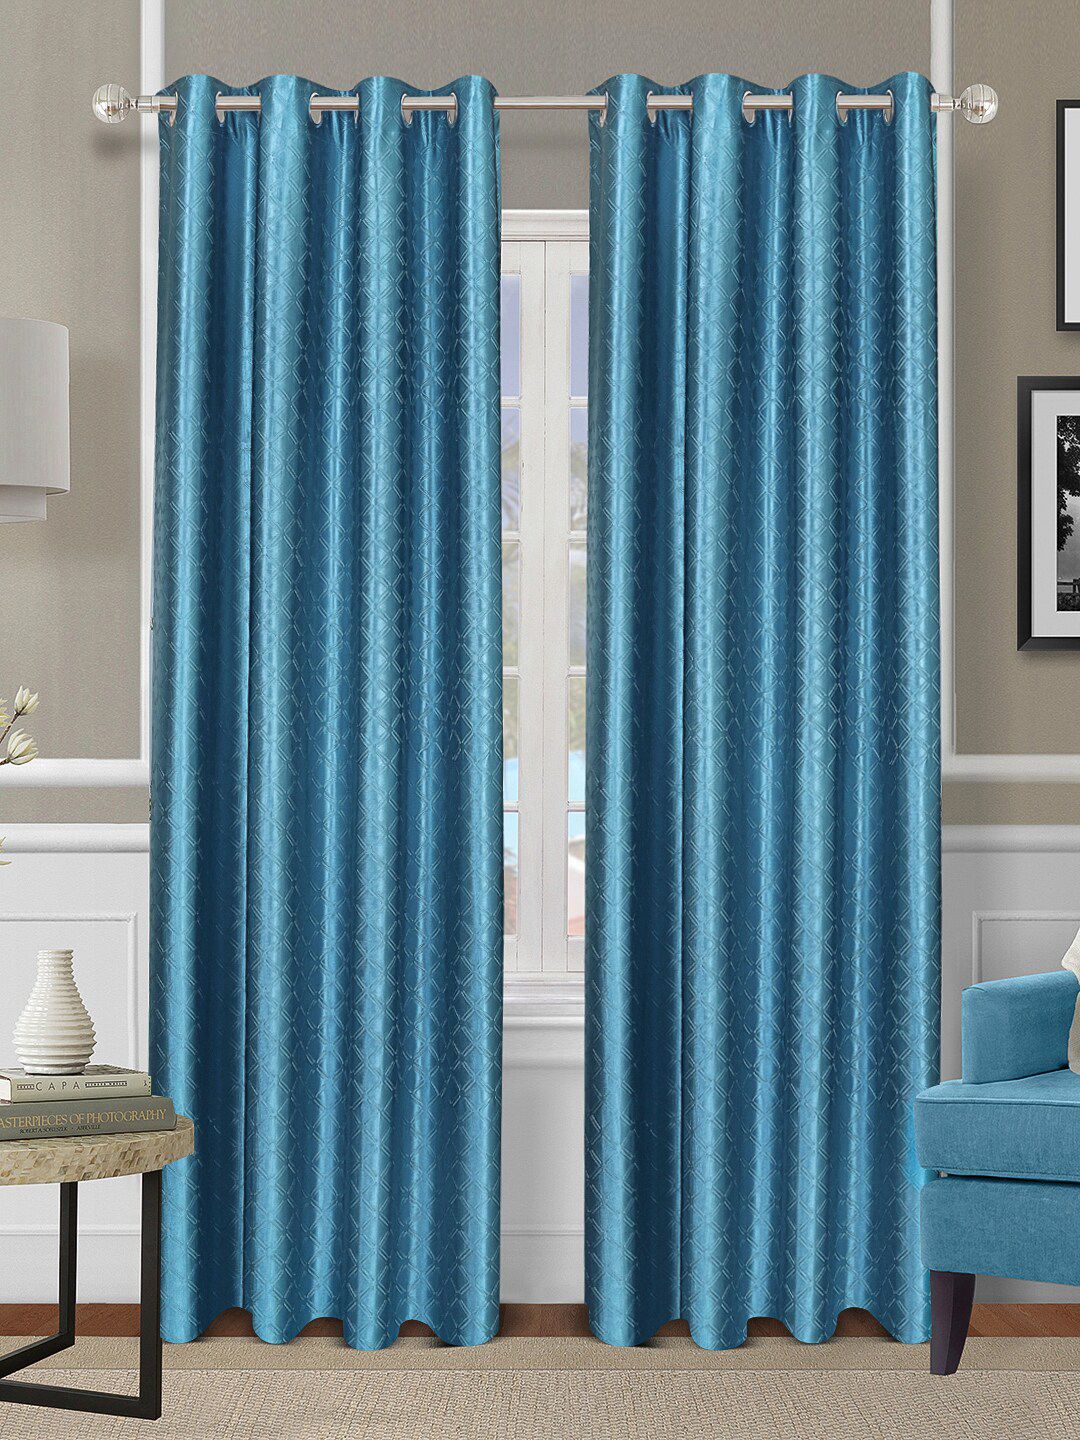 ROMEE Turquoise Blue Set of 2 Geometric Room Darkening Long Door Curtains Price in India